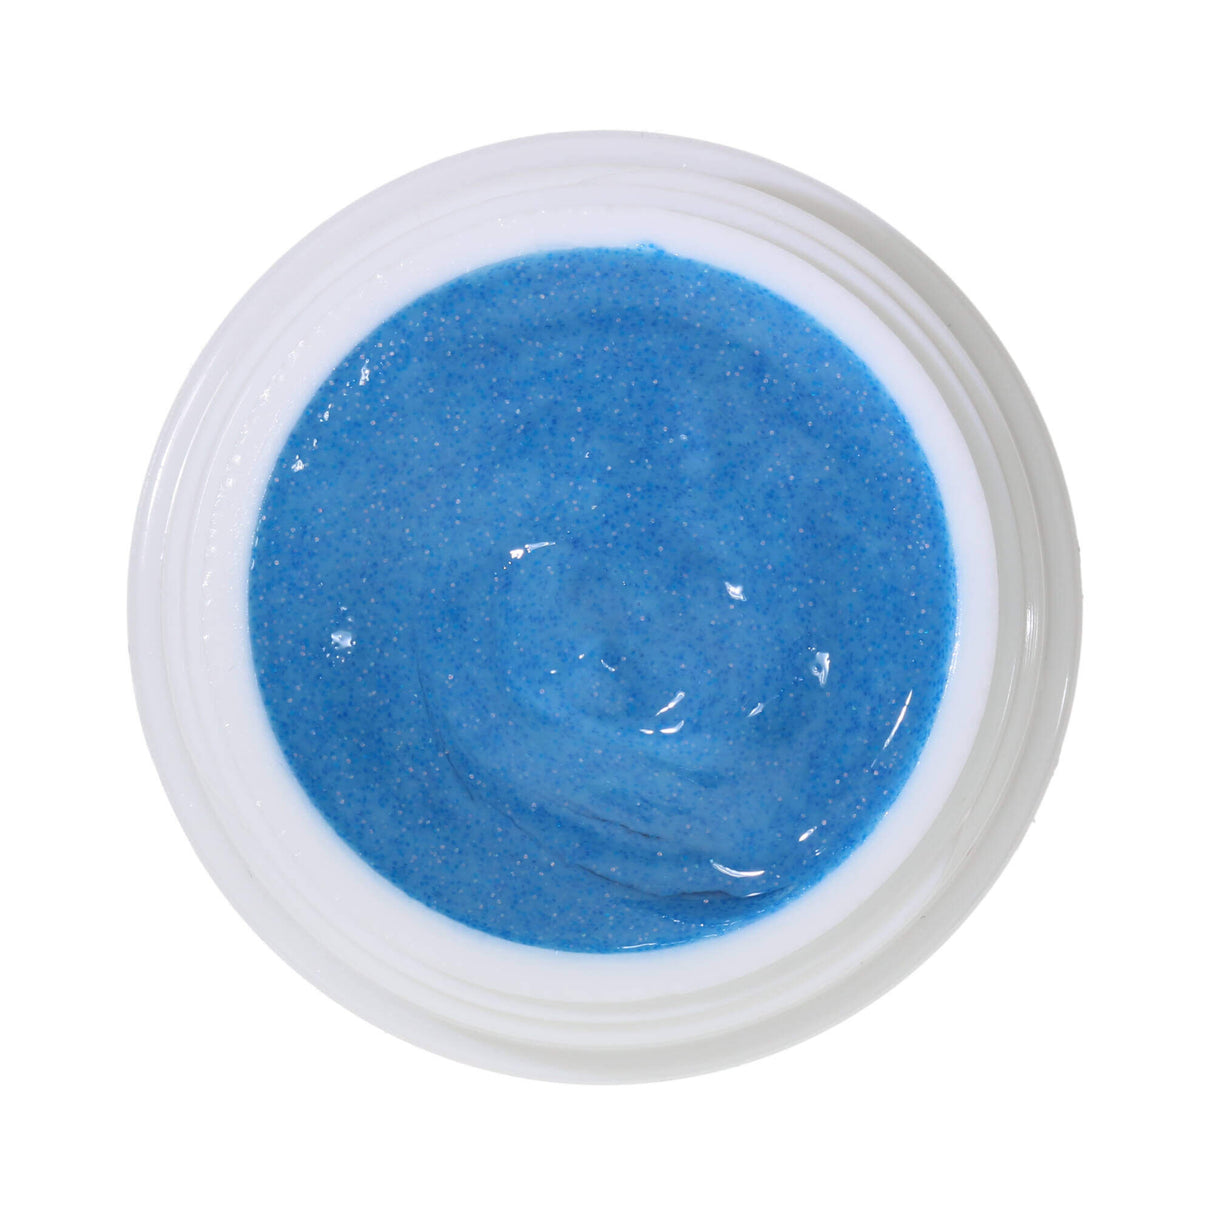 # 301 Premium GLITTER Color Gel 5ml Caribbean blue with green / blue glitter